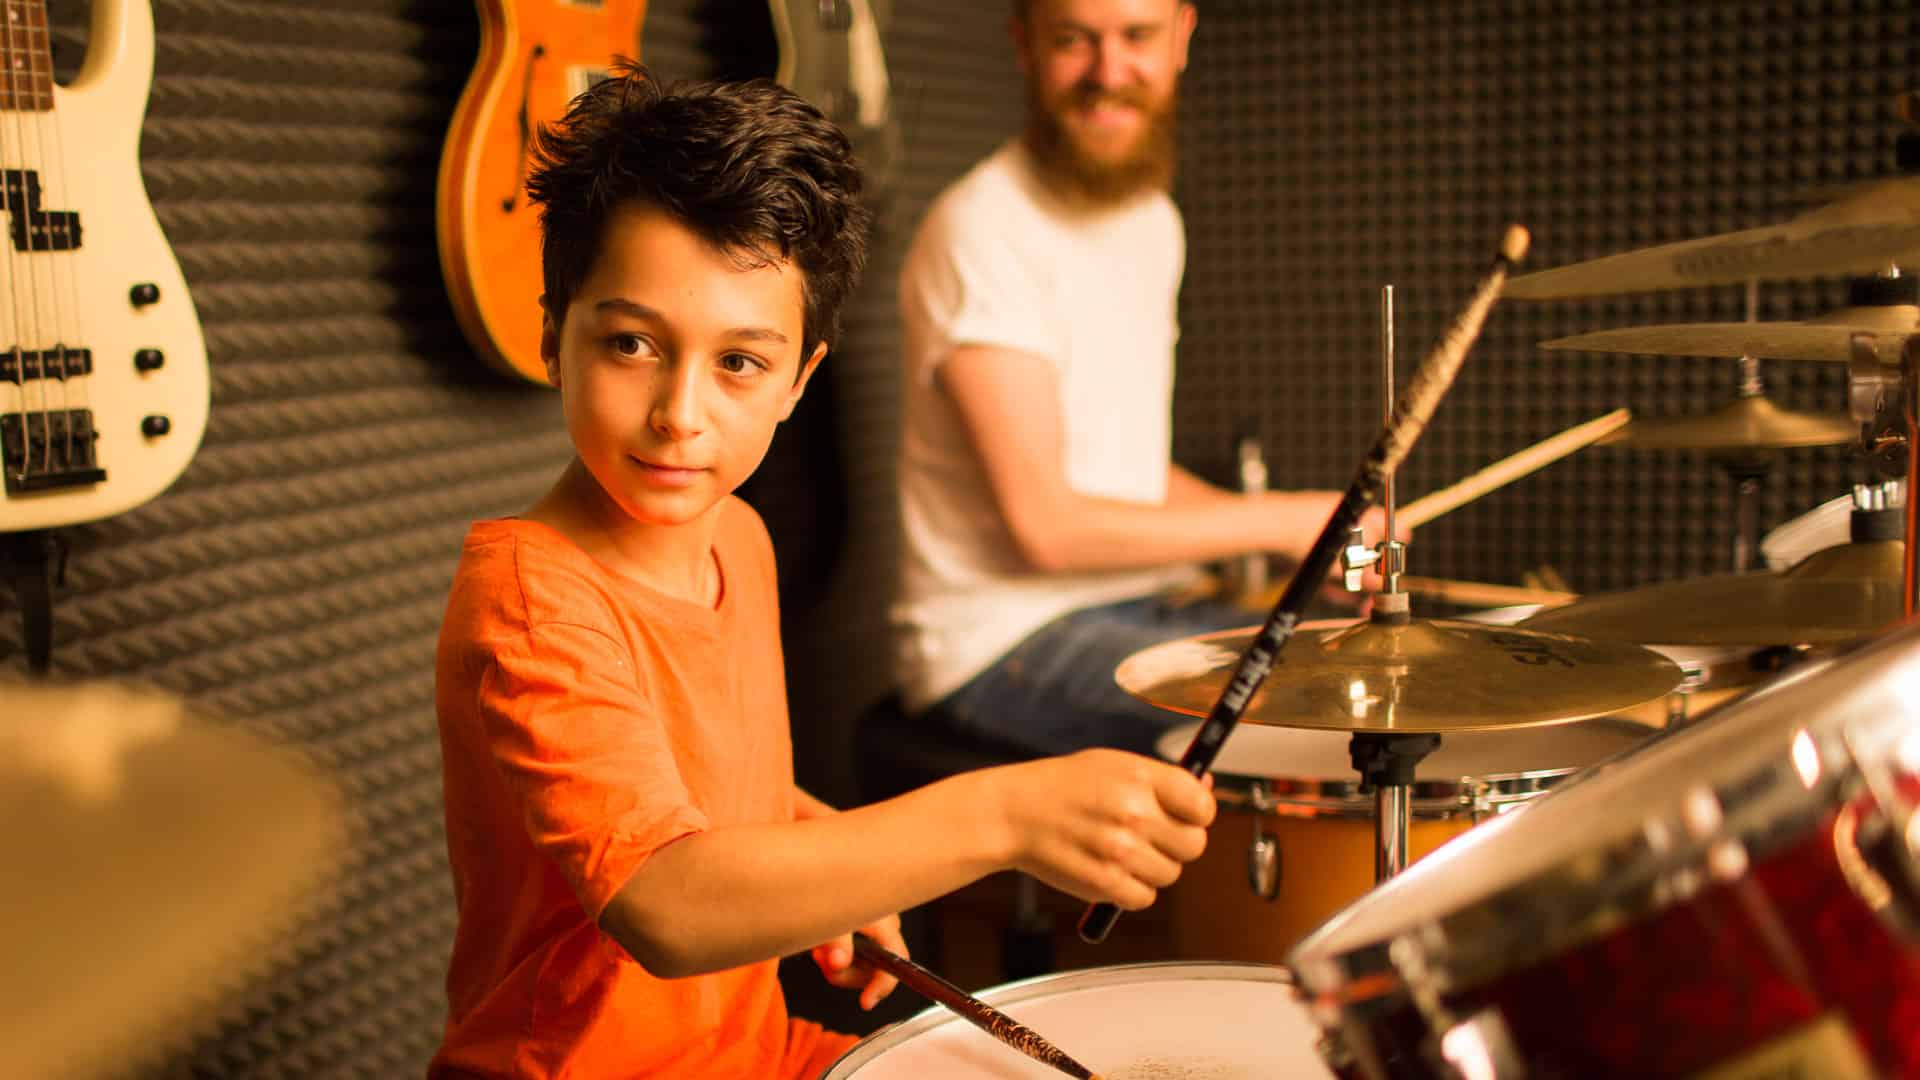 Sam-and-kid-2-drum-kits-edit.jpg